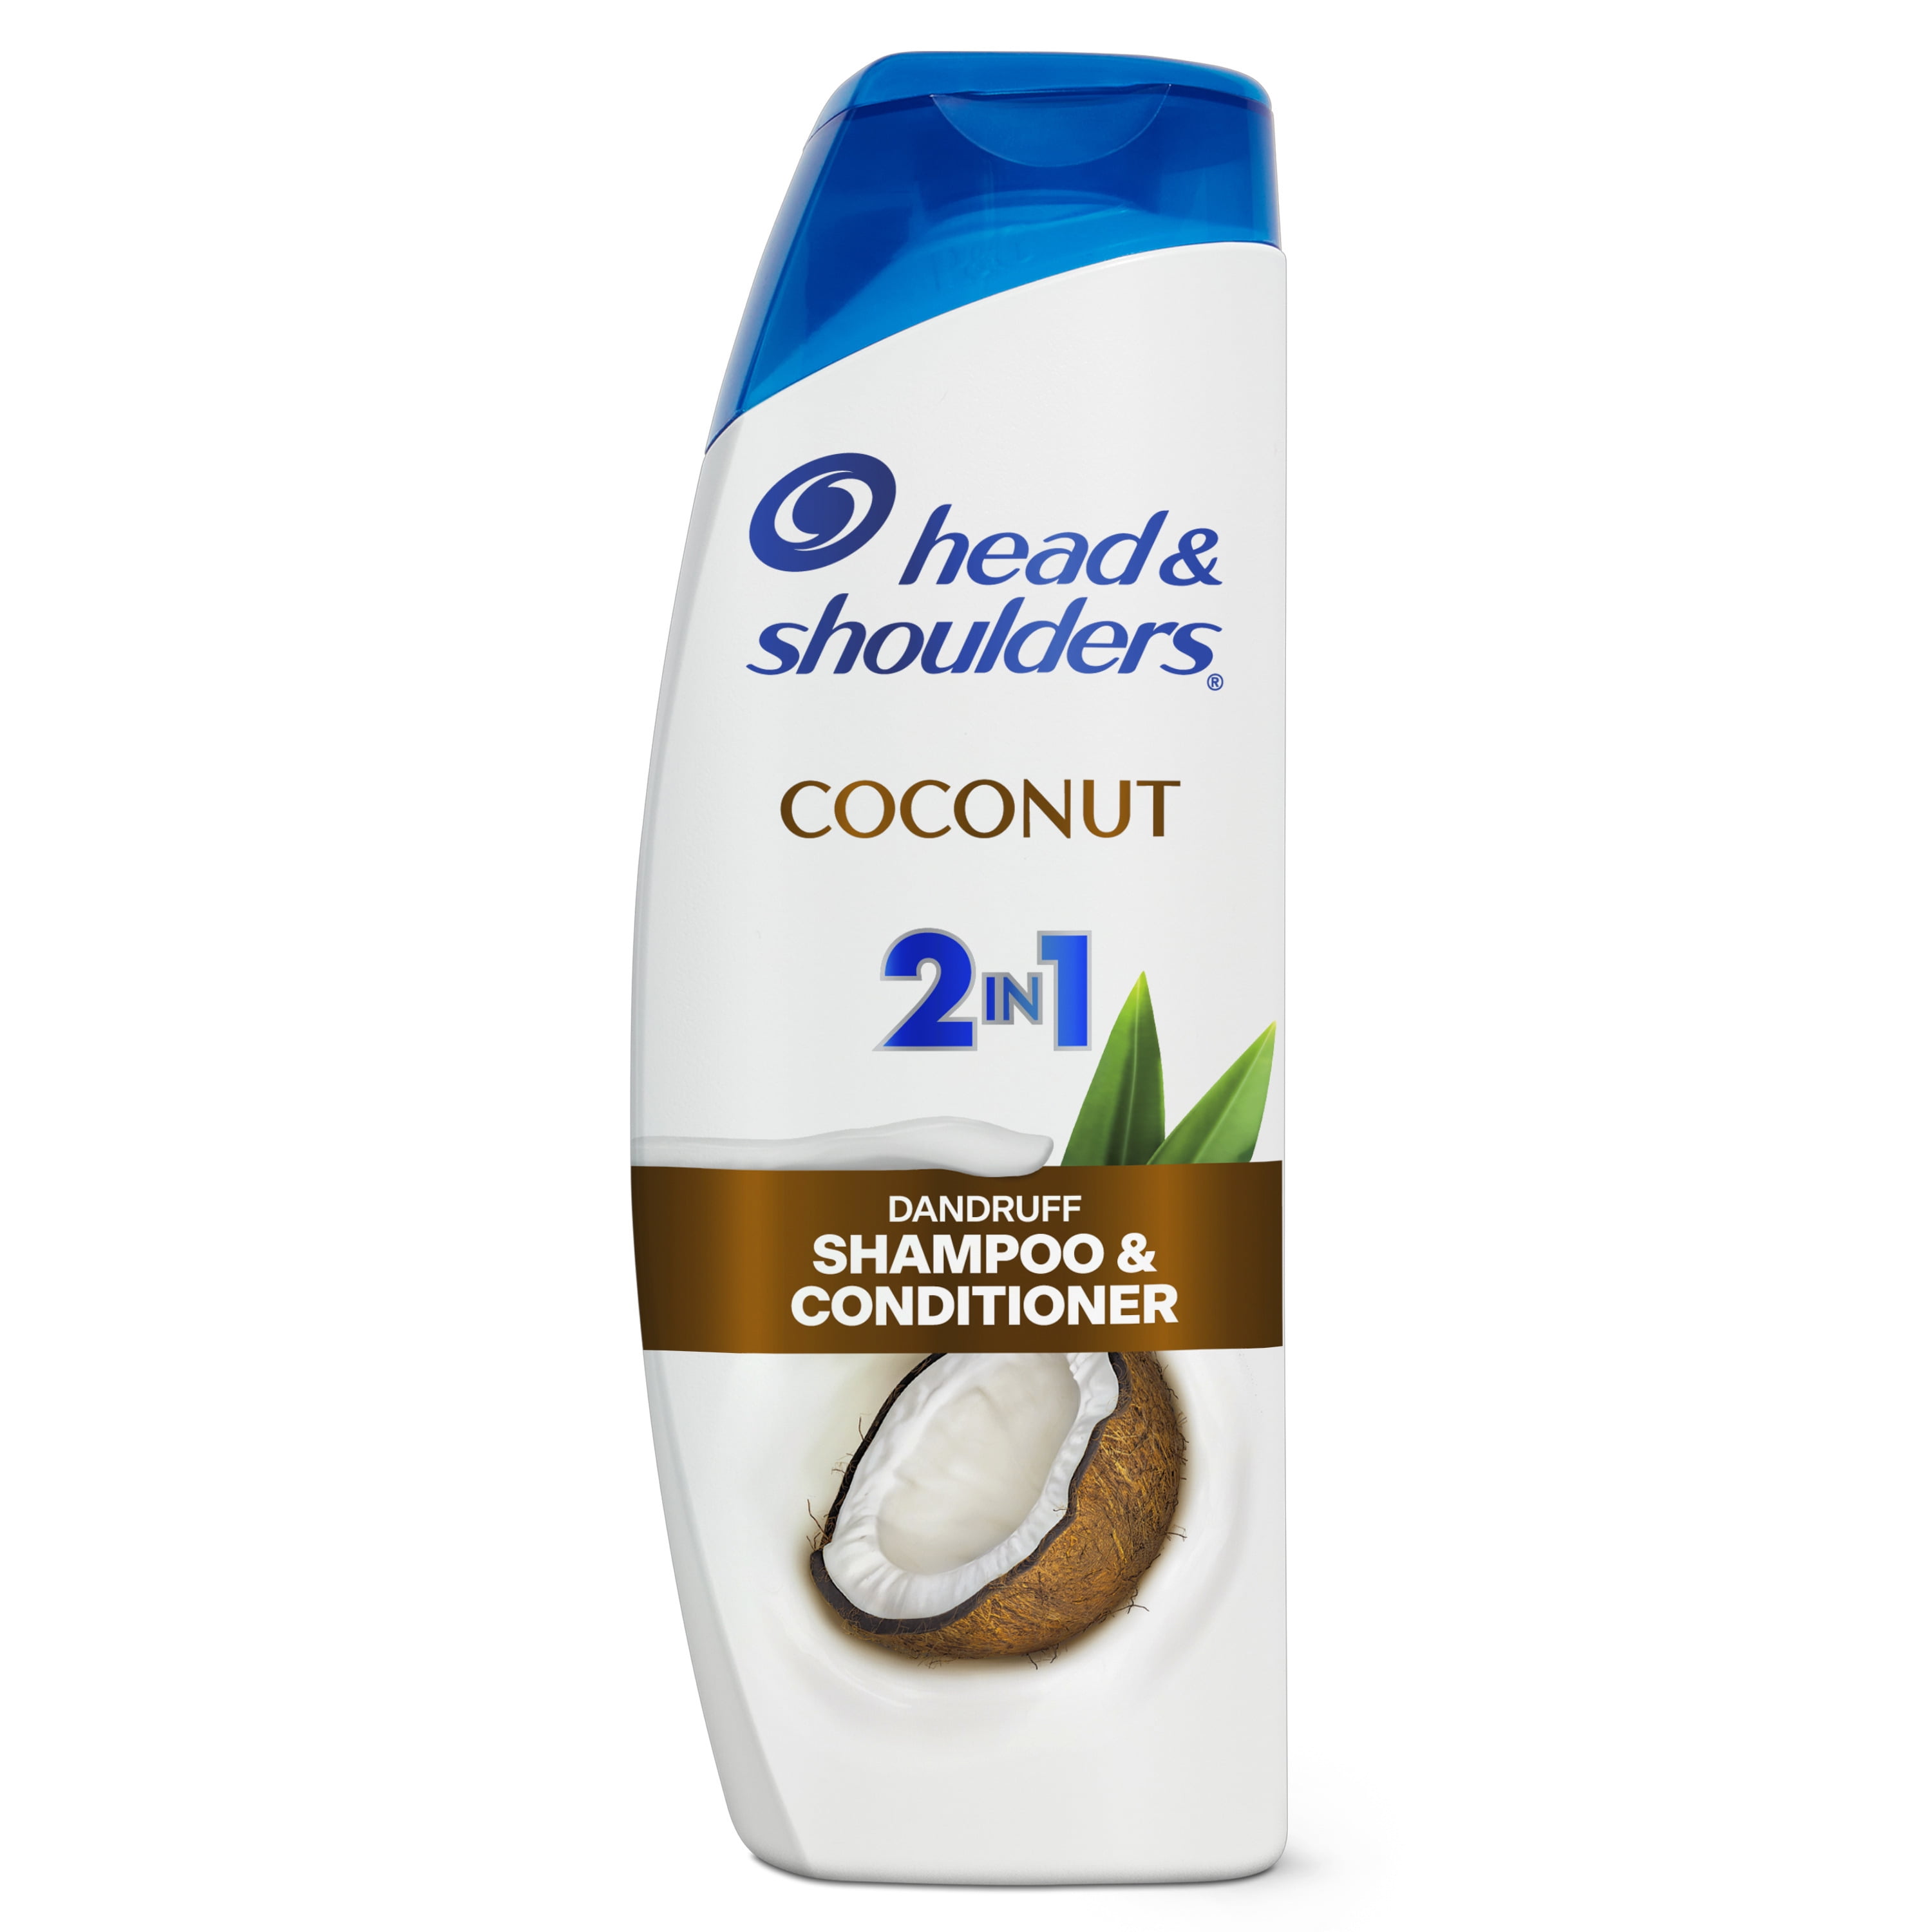 Head and Shoulders 2 in 1 Dandruff Shampoo and Conditioner, Coconut, 12.5 oz